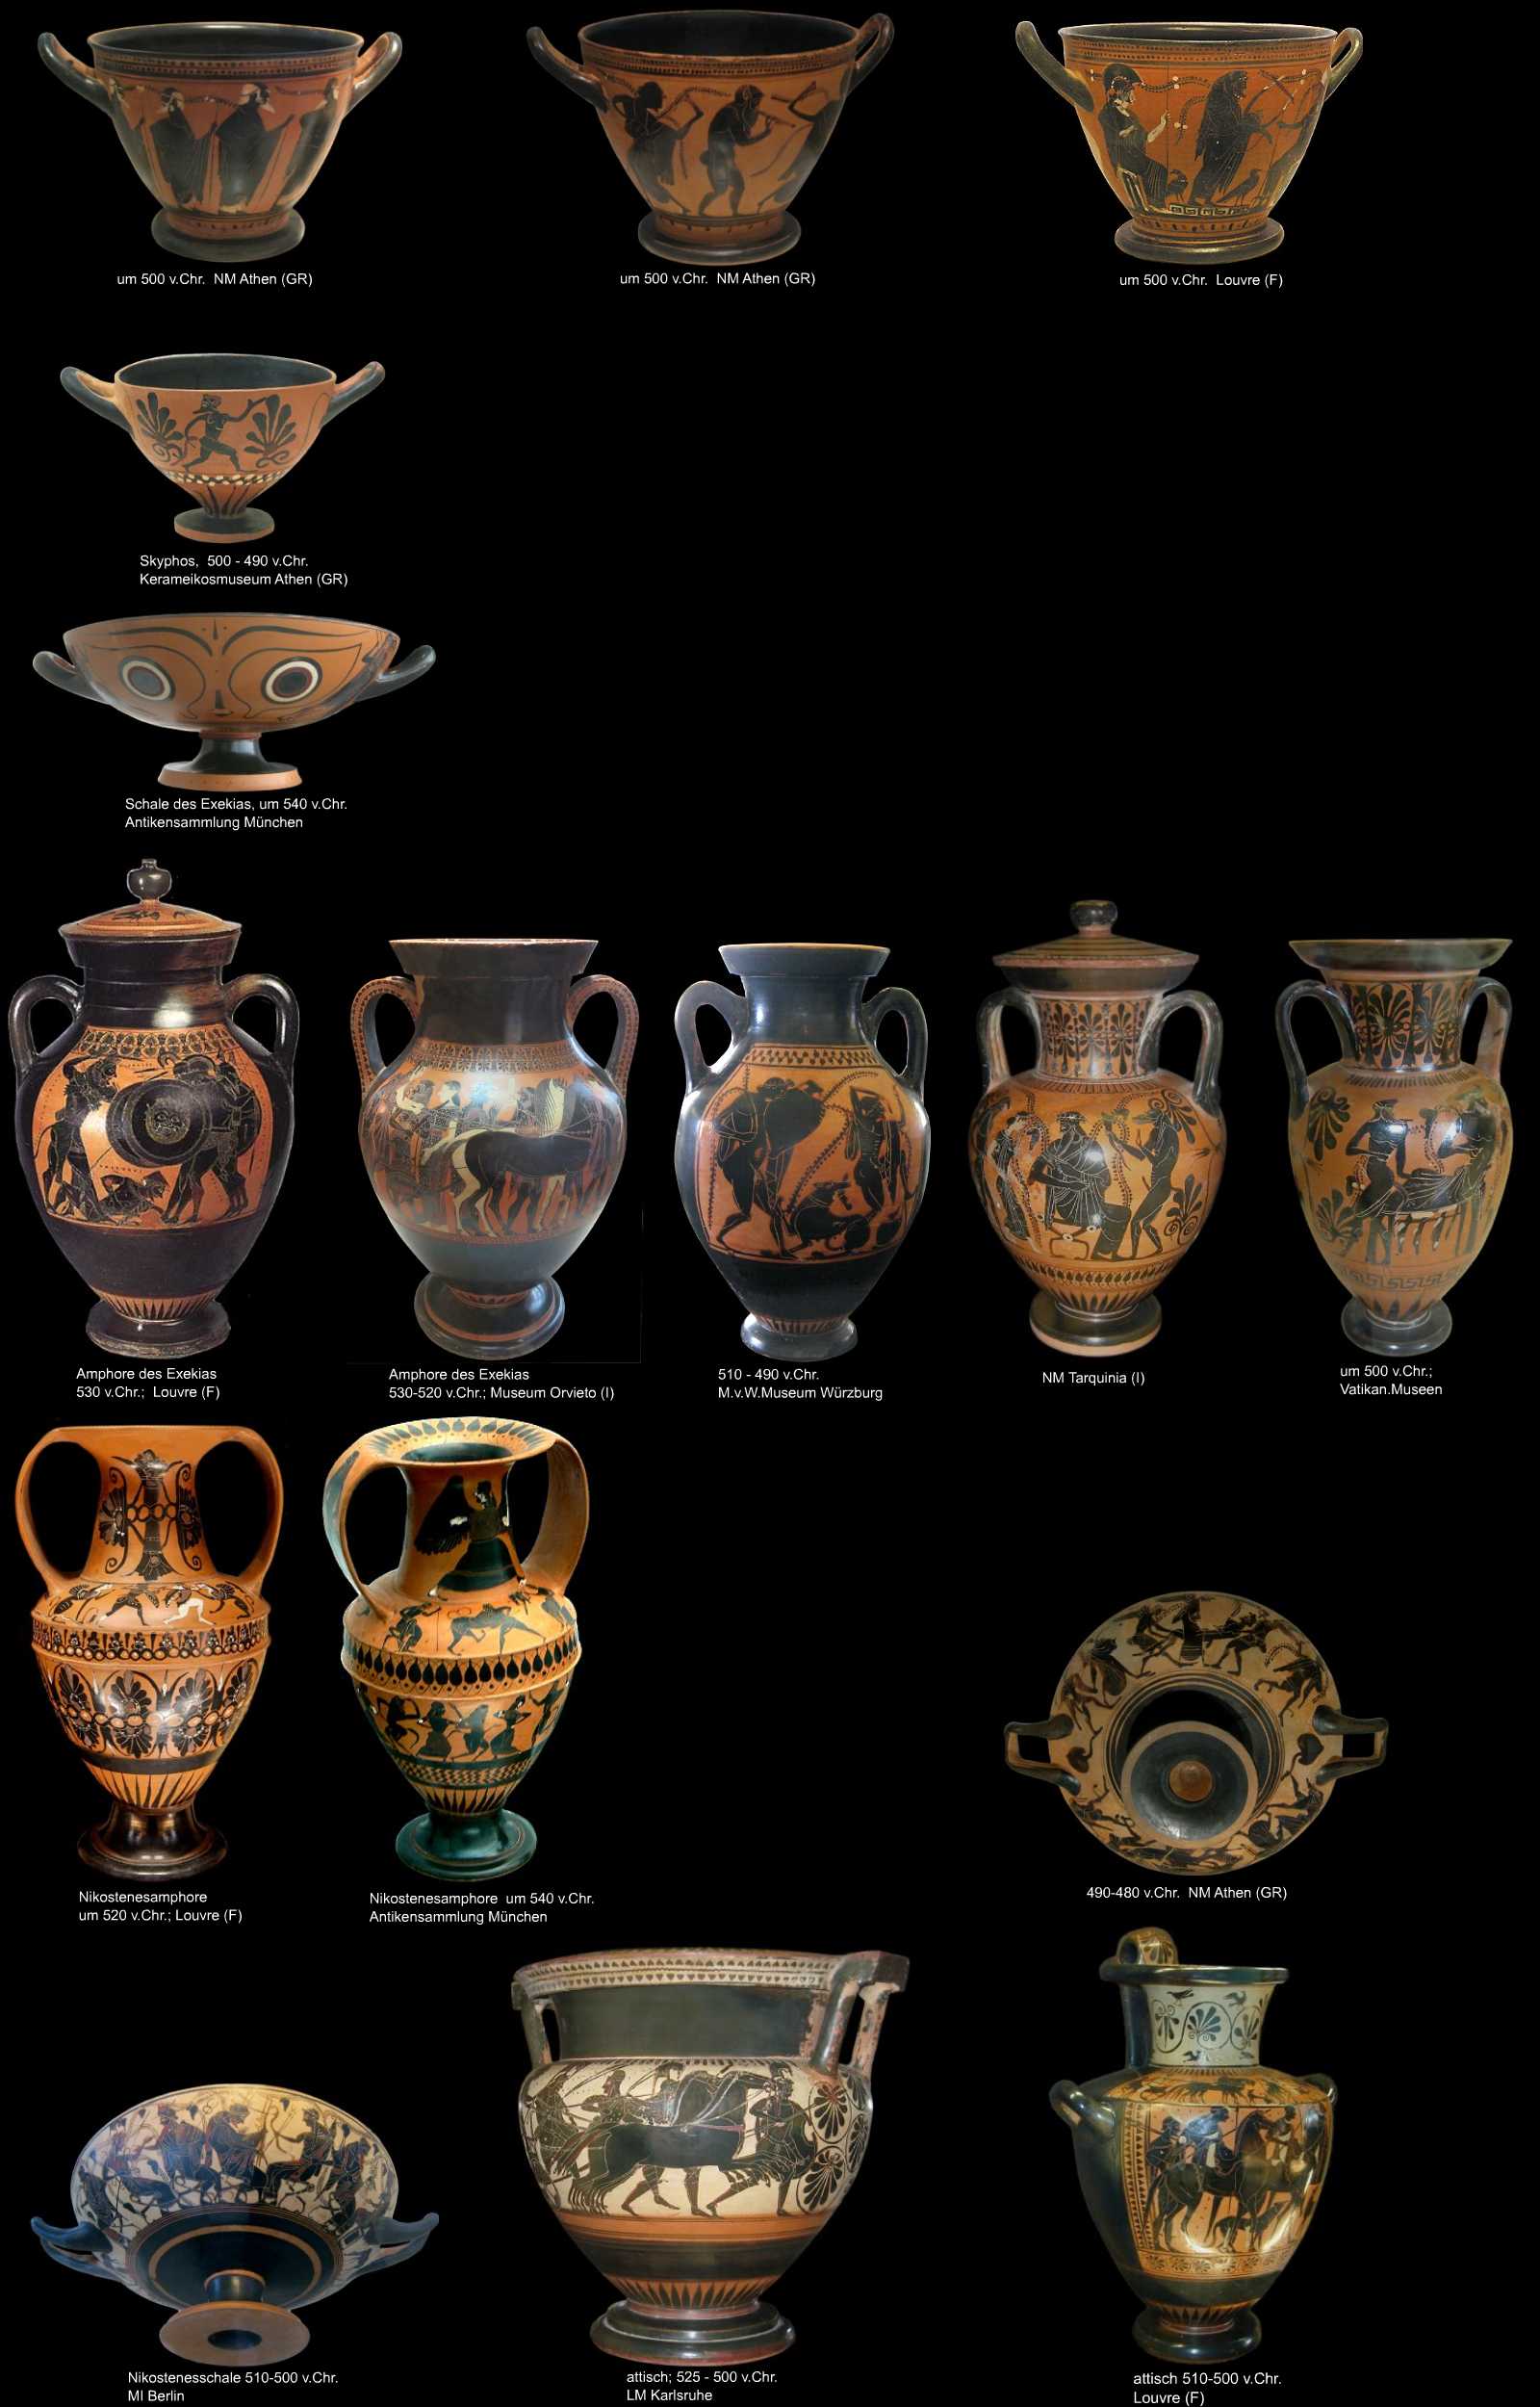 attische Keramik - schwarzfigurige Ware